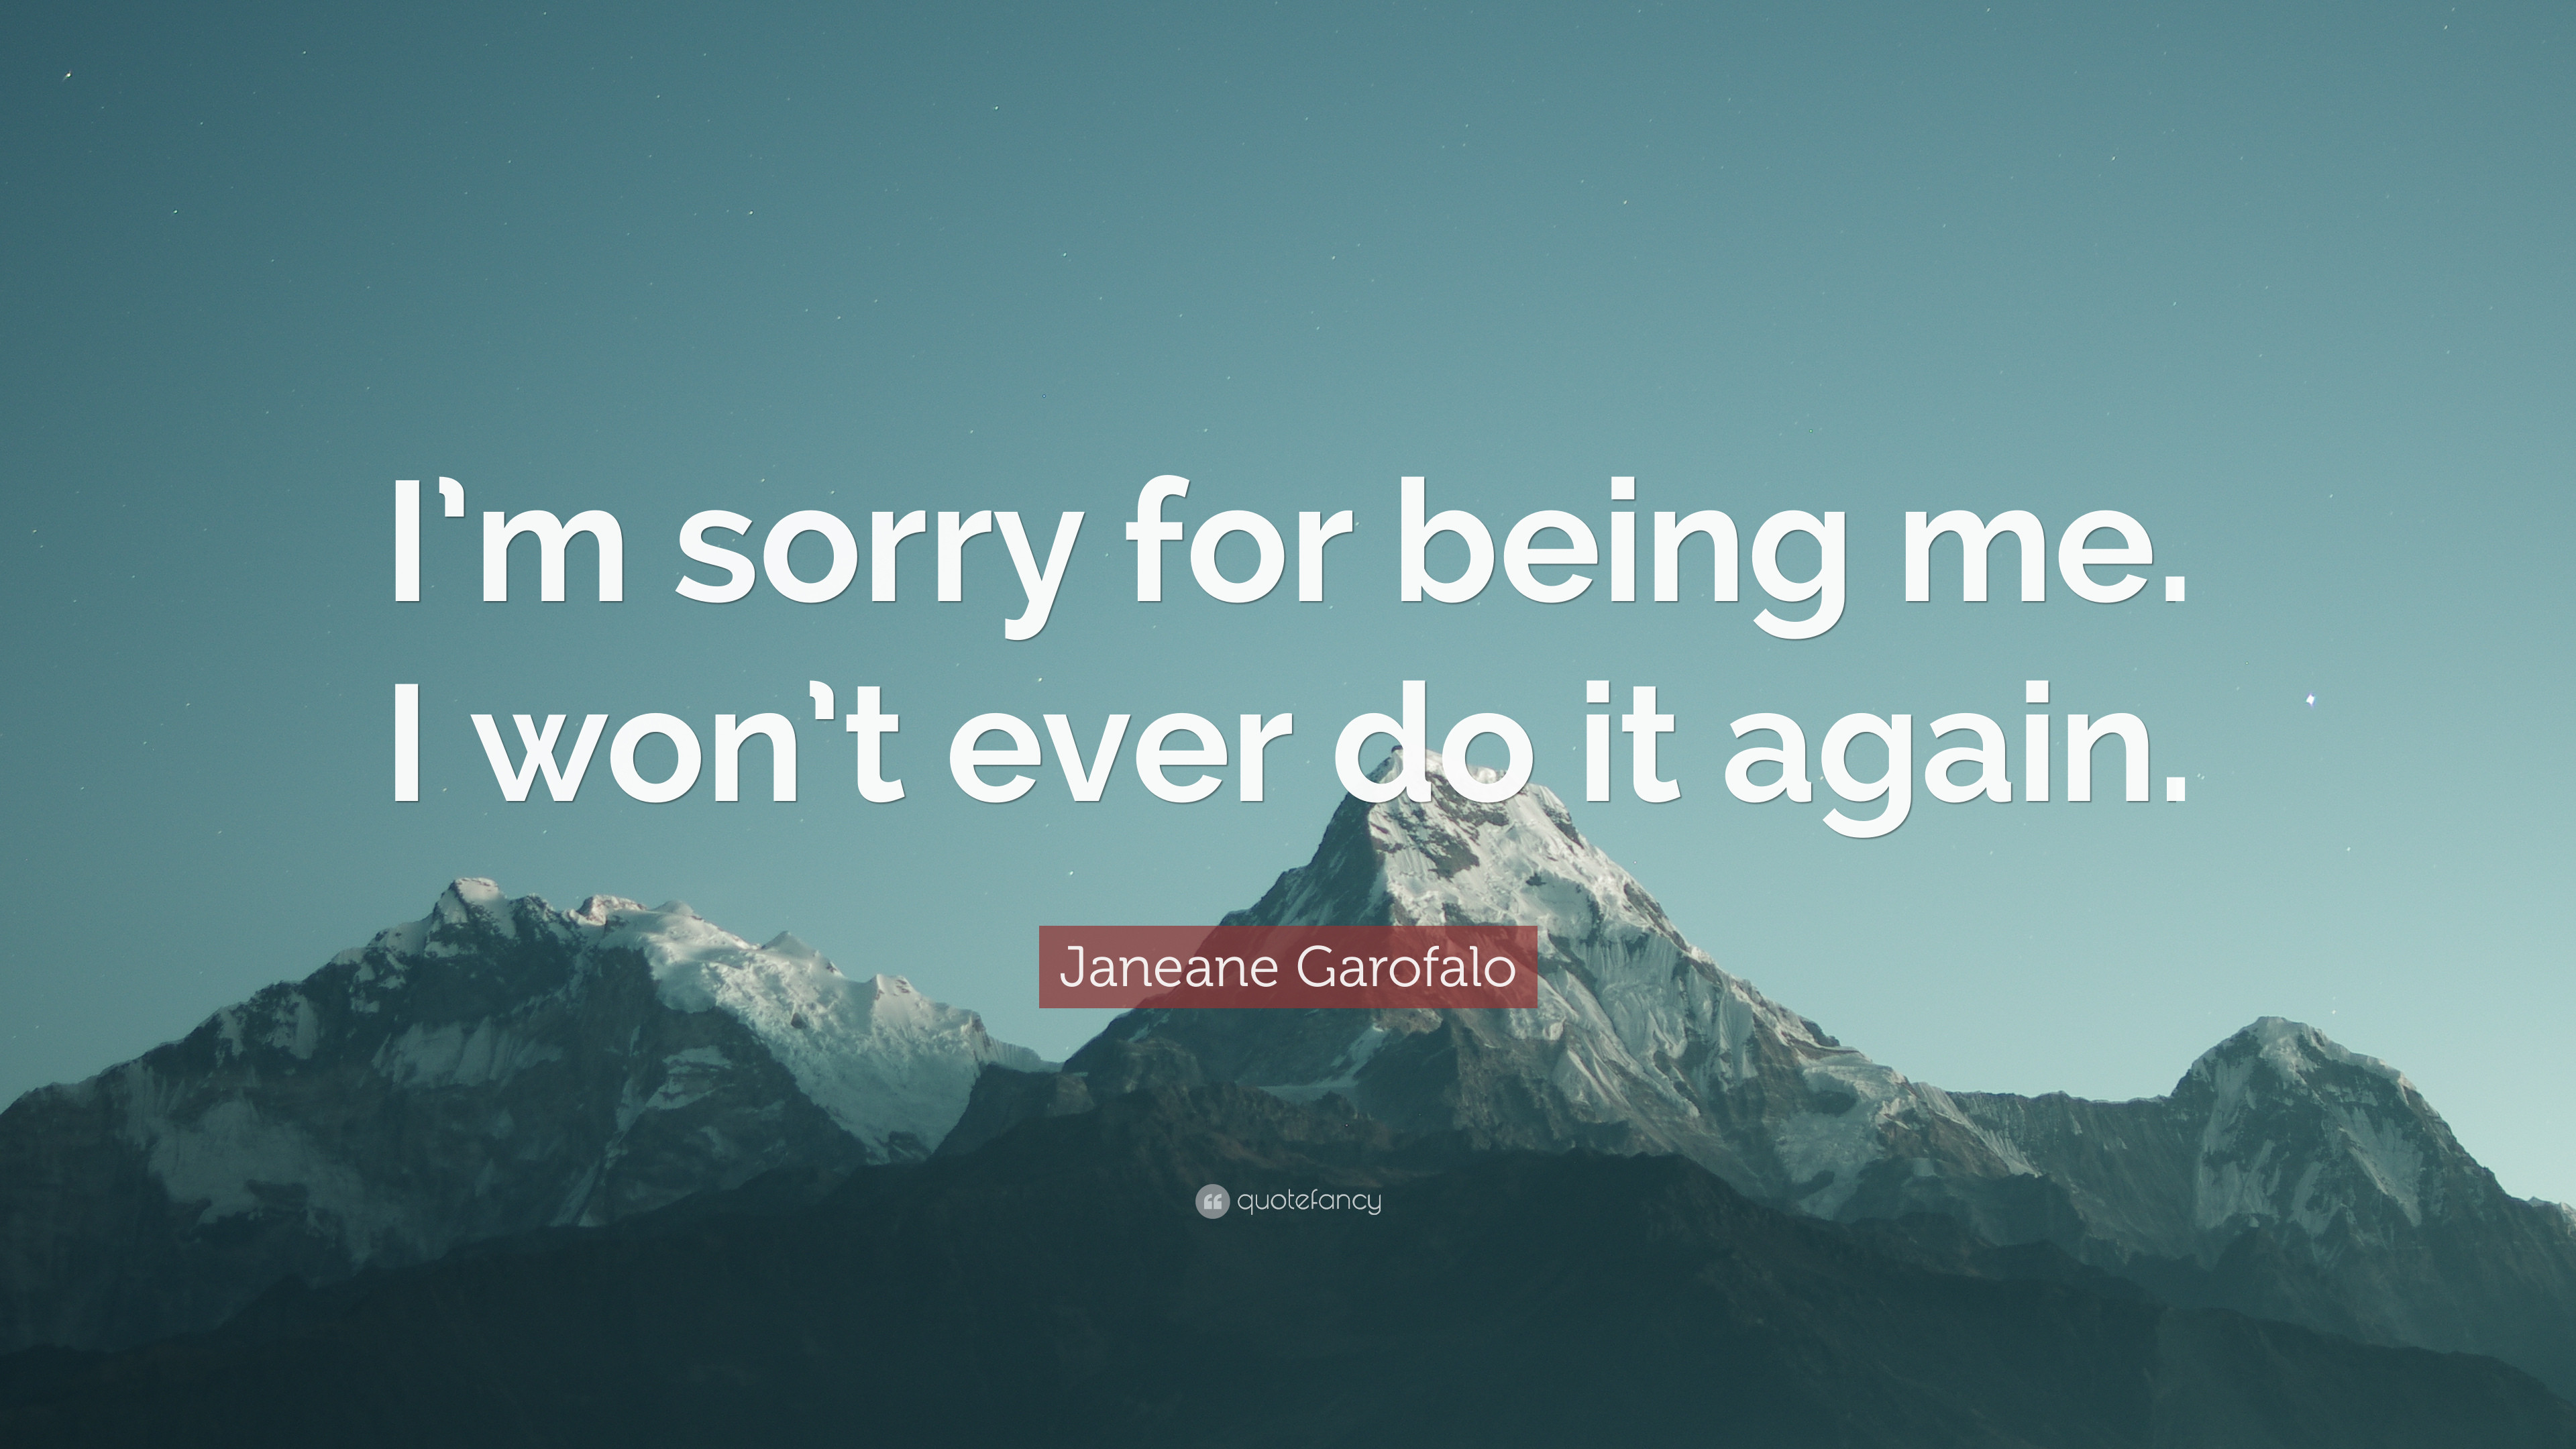 3840x2160 Janeane Garofalo Quote: “I'm sorry for being me. I won'